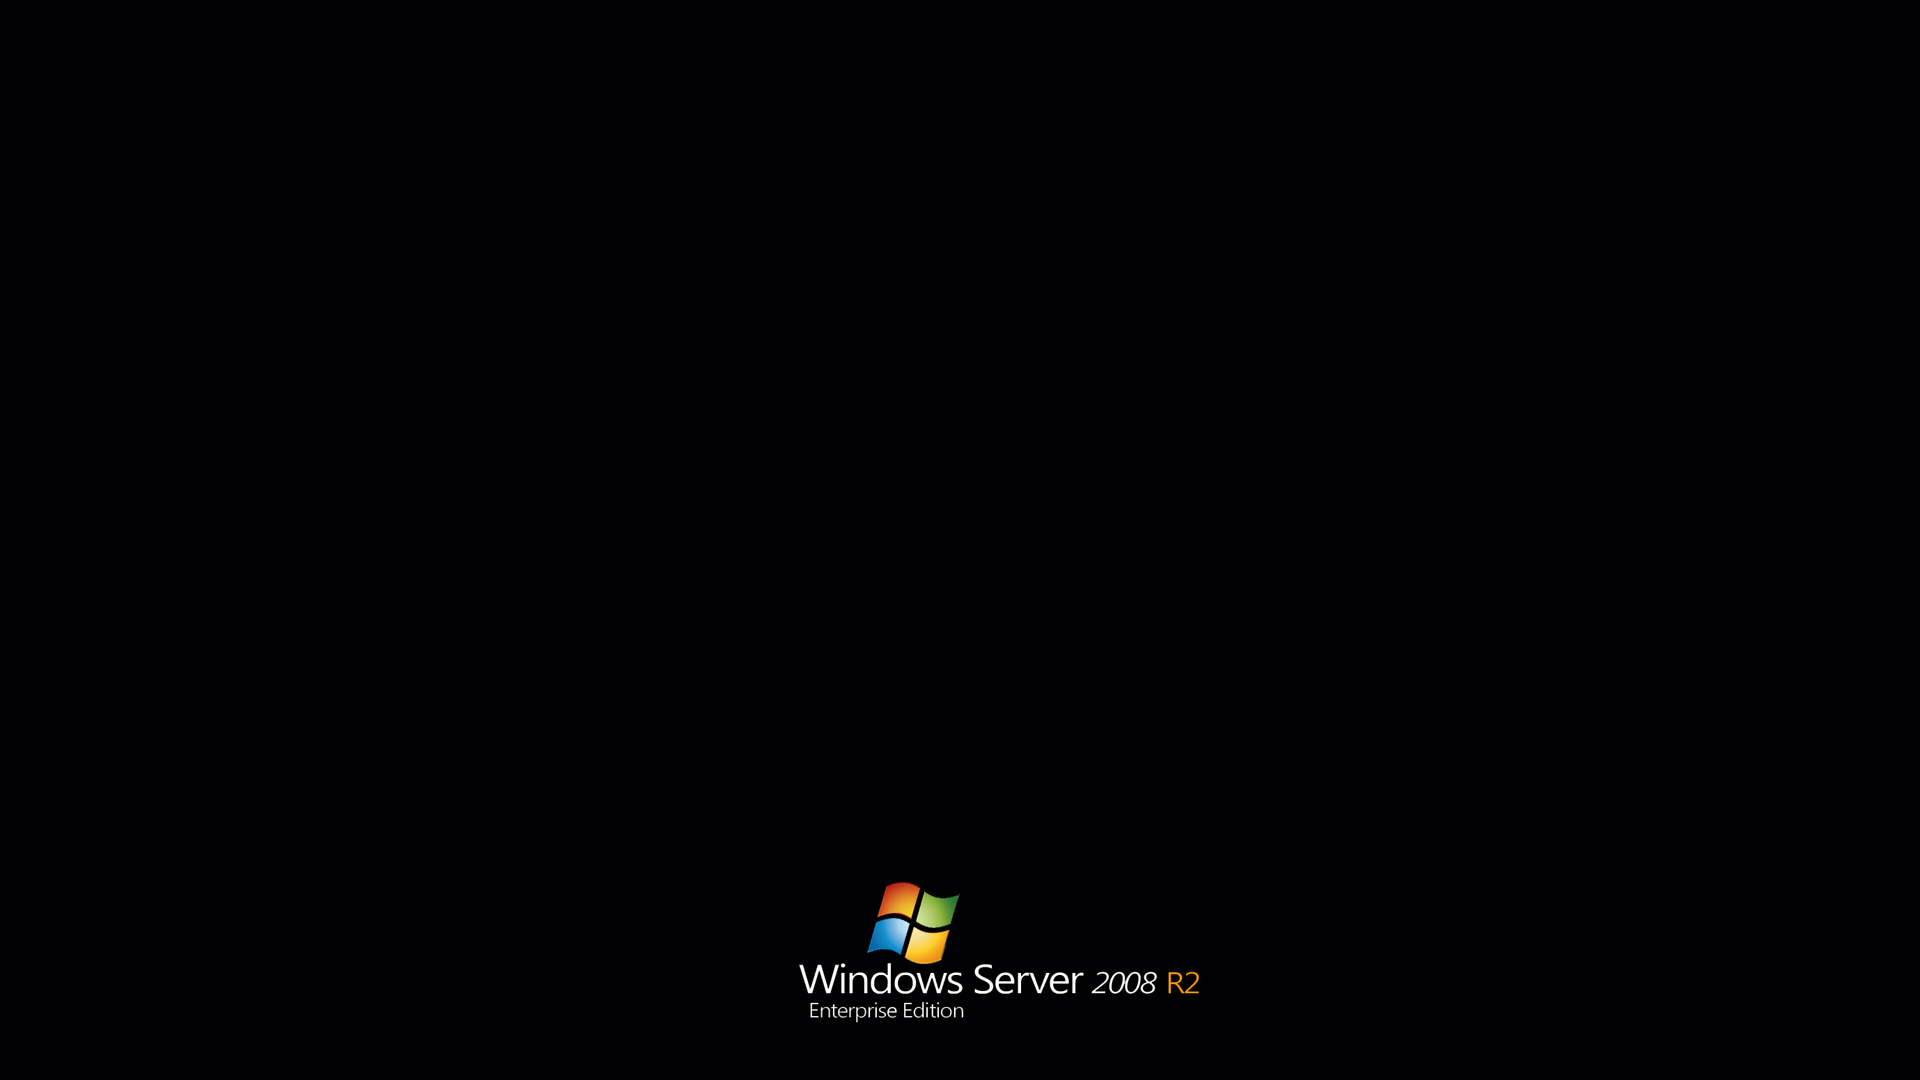 50 Windows Server 2008 R2 Wallpaper On Wallpapersafari 9853